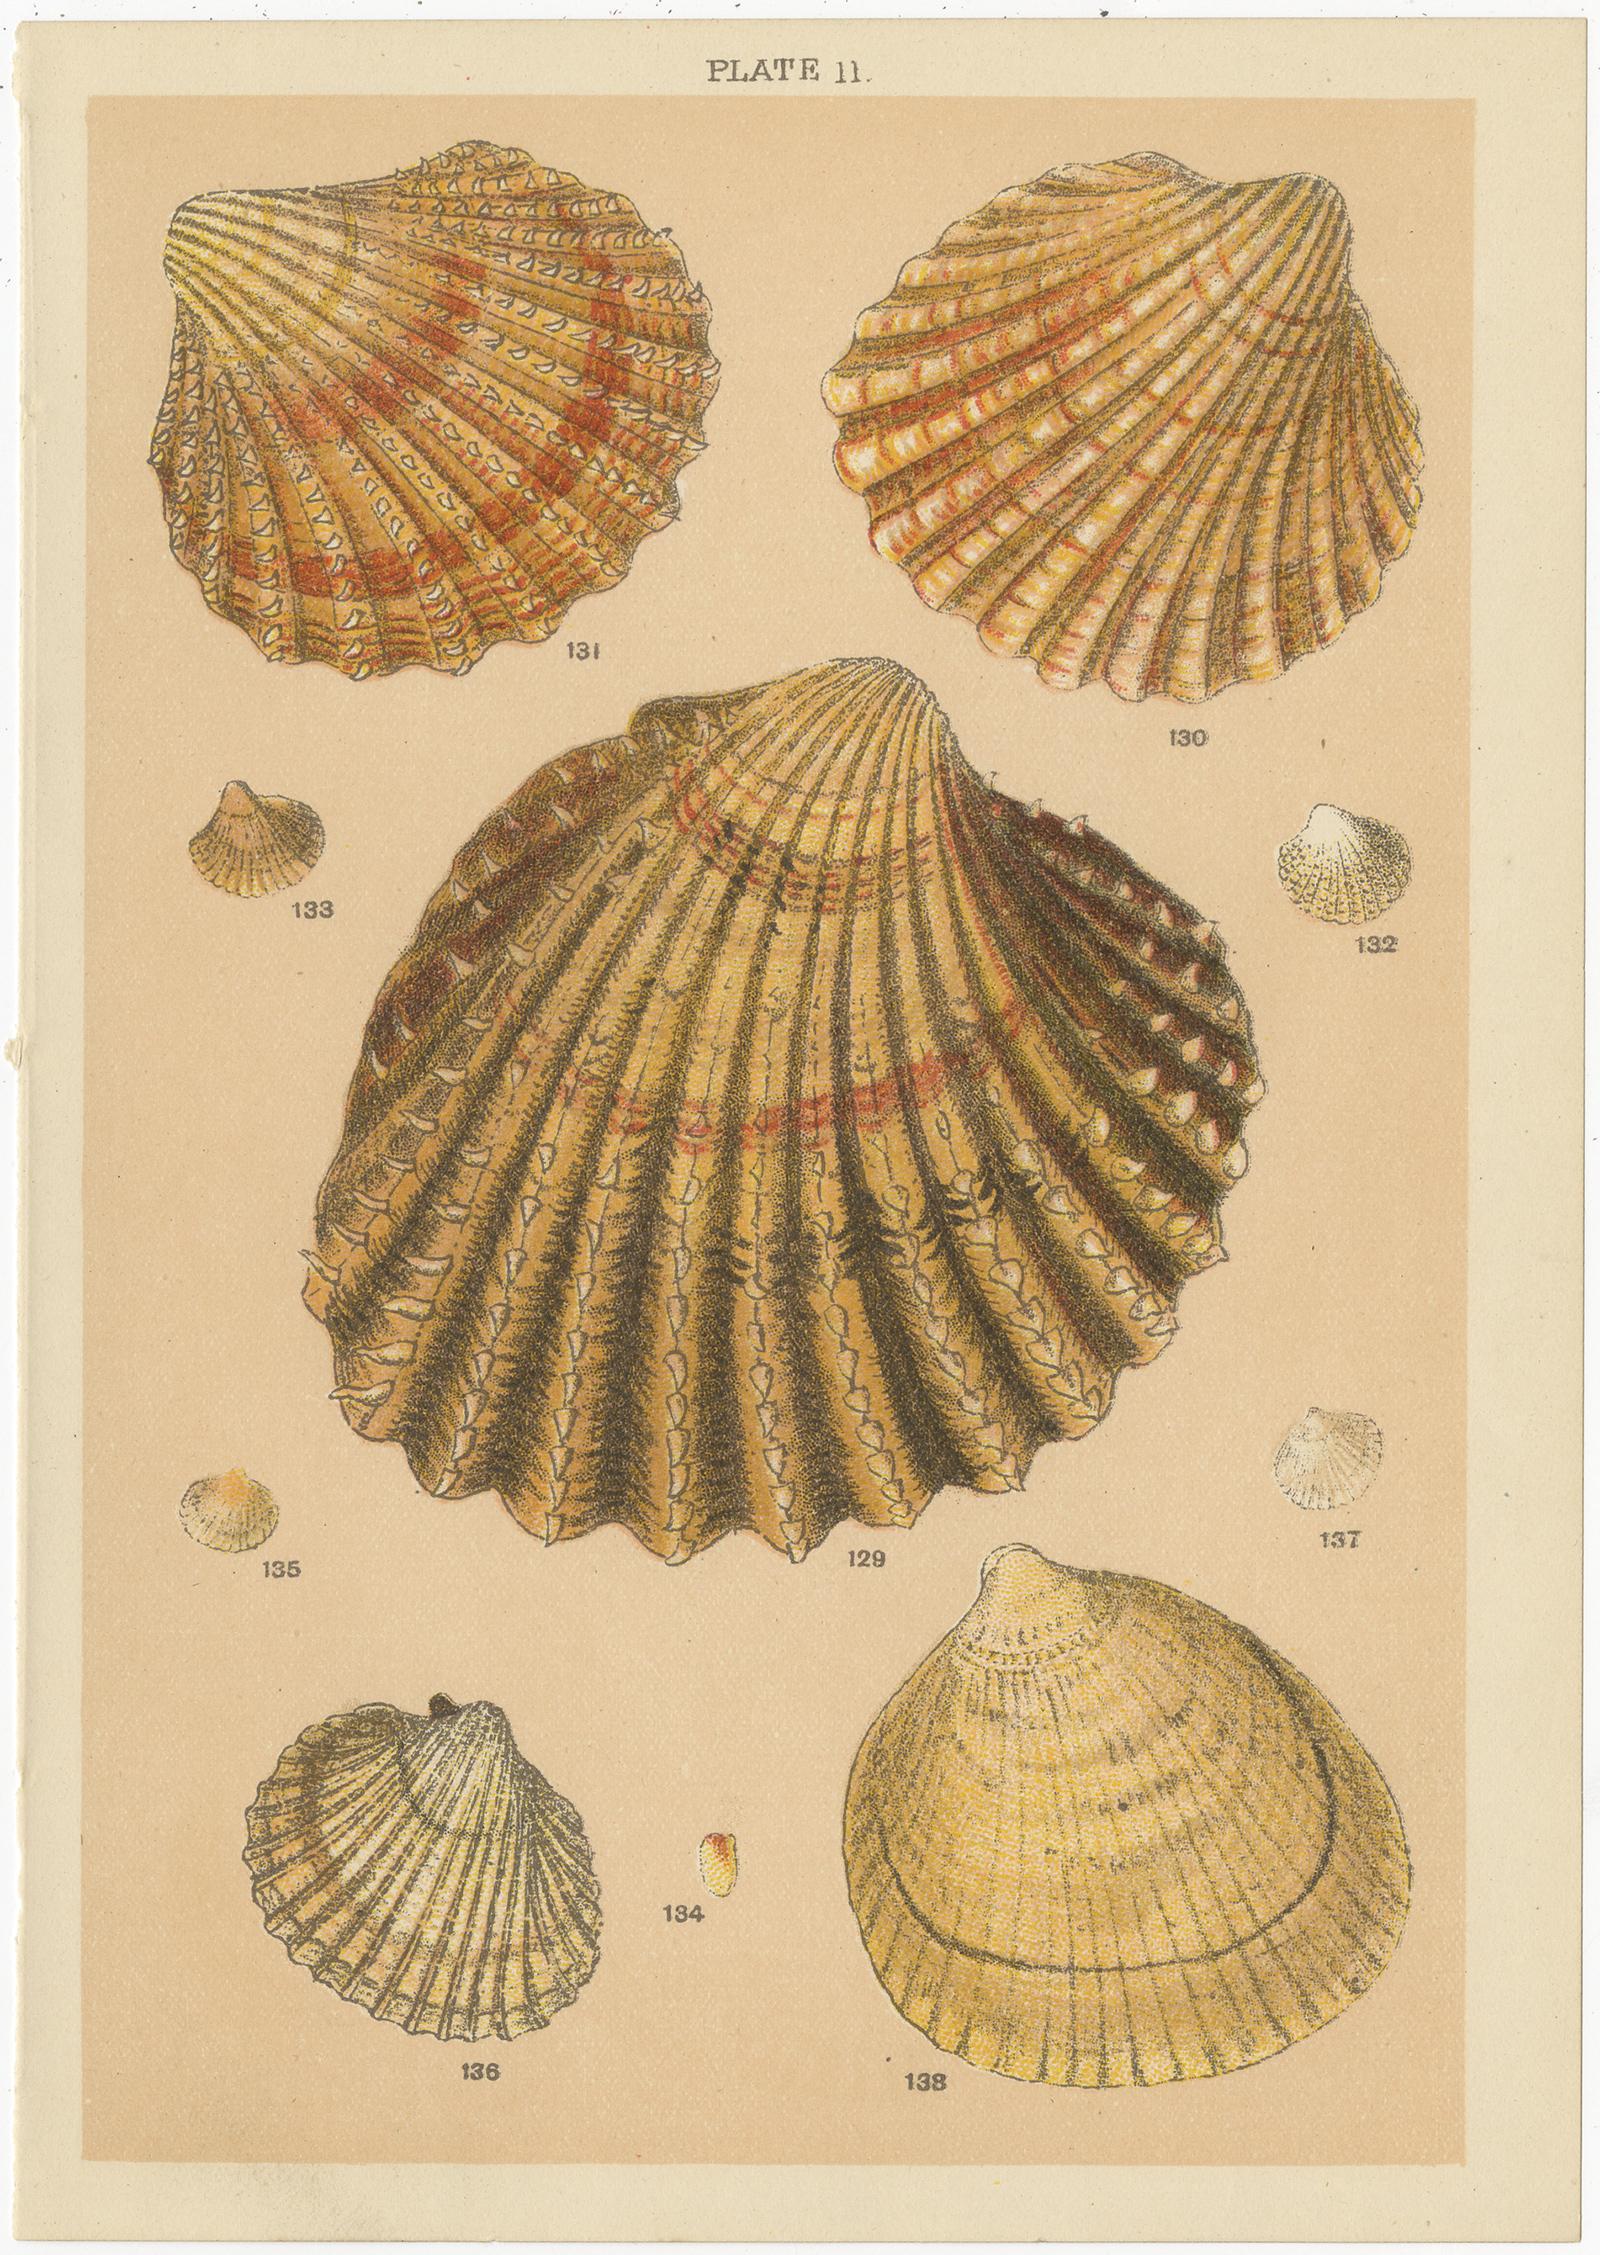 Set of 10 Antique Prints of Shells Including Razor Shells by Gordon 'circa 1900' 5